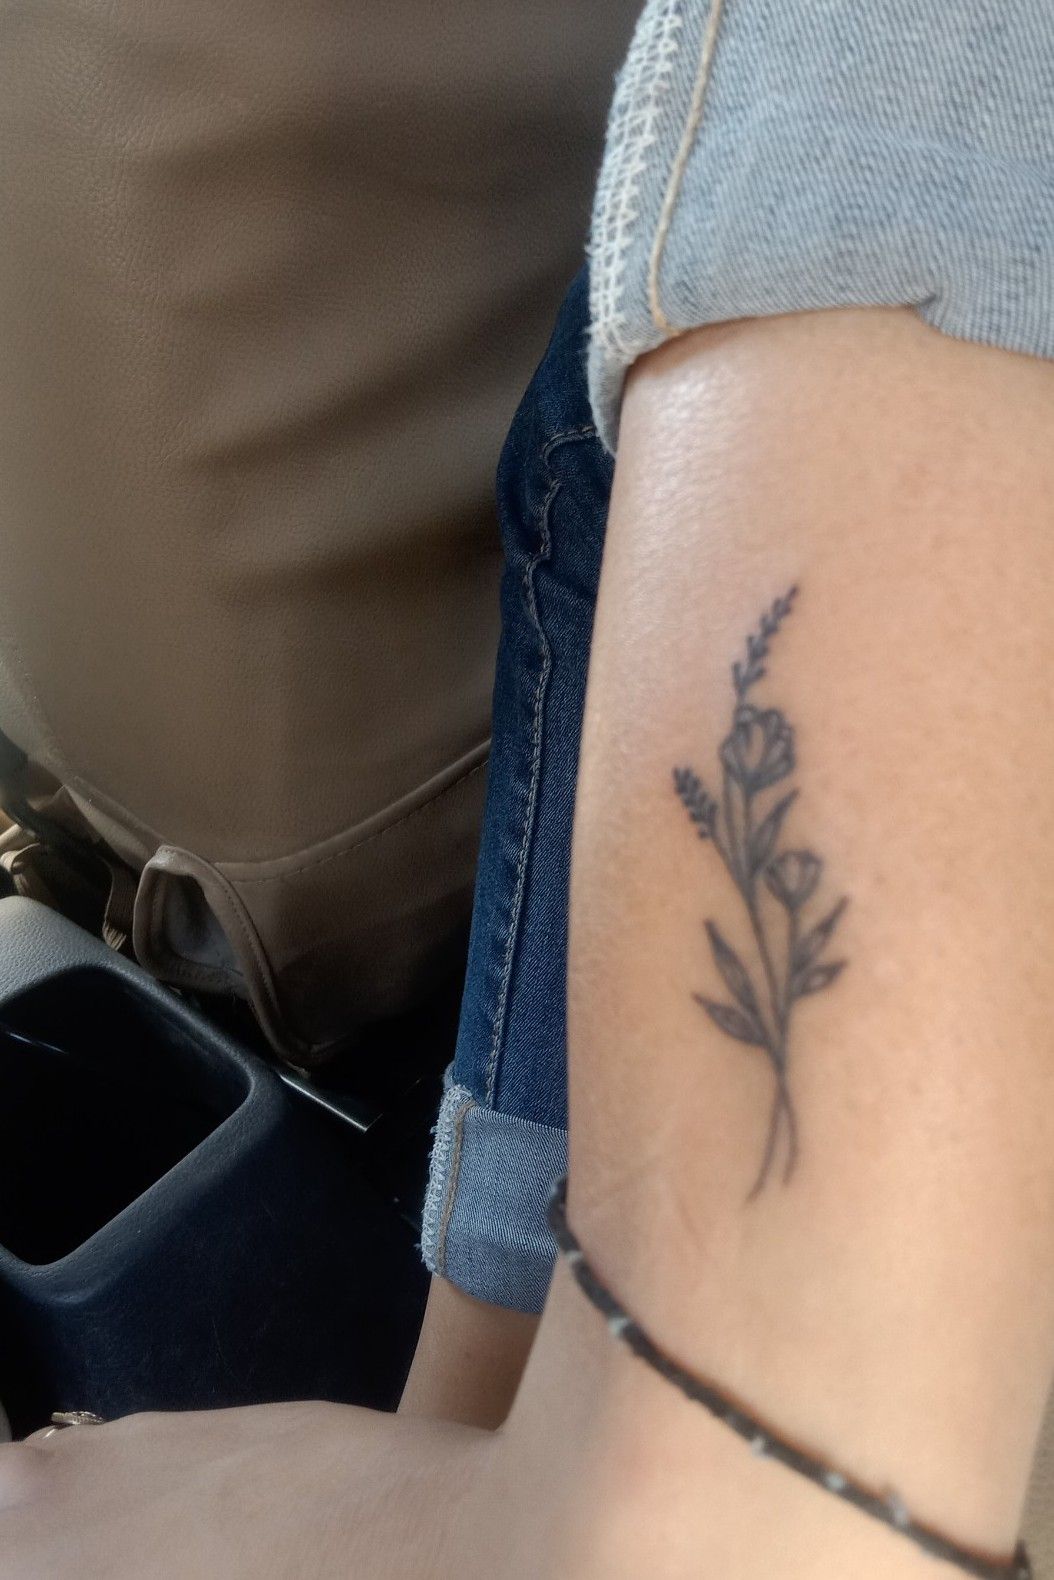 Name tattoo # both side of pratiksha name tattoo # tattoo artist # Satish  Sawant # satish tattoo # | By Satish TattooFacebook